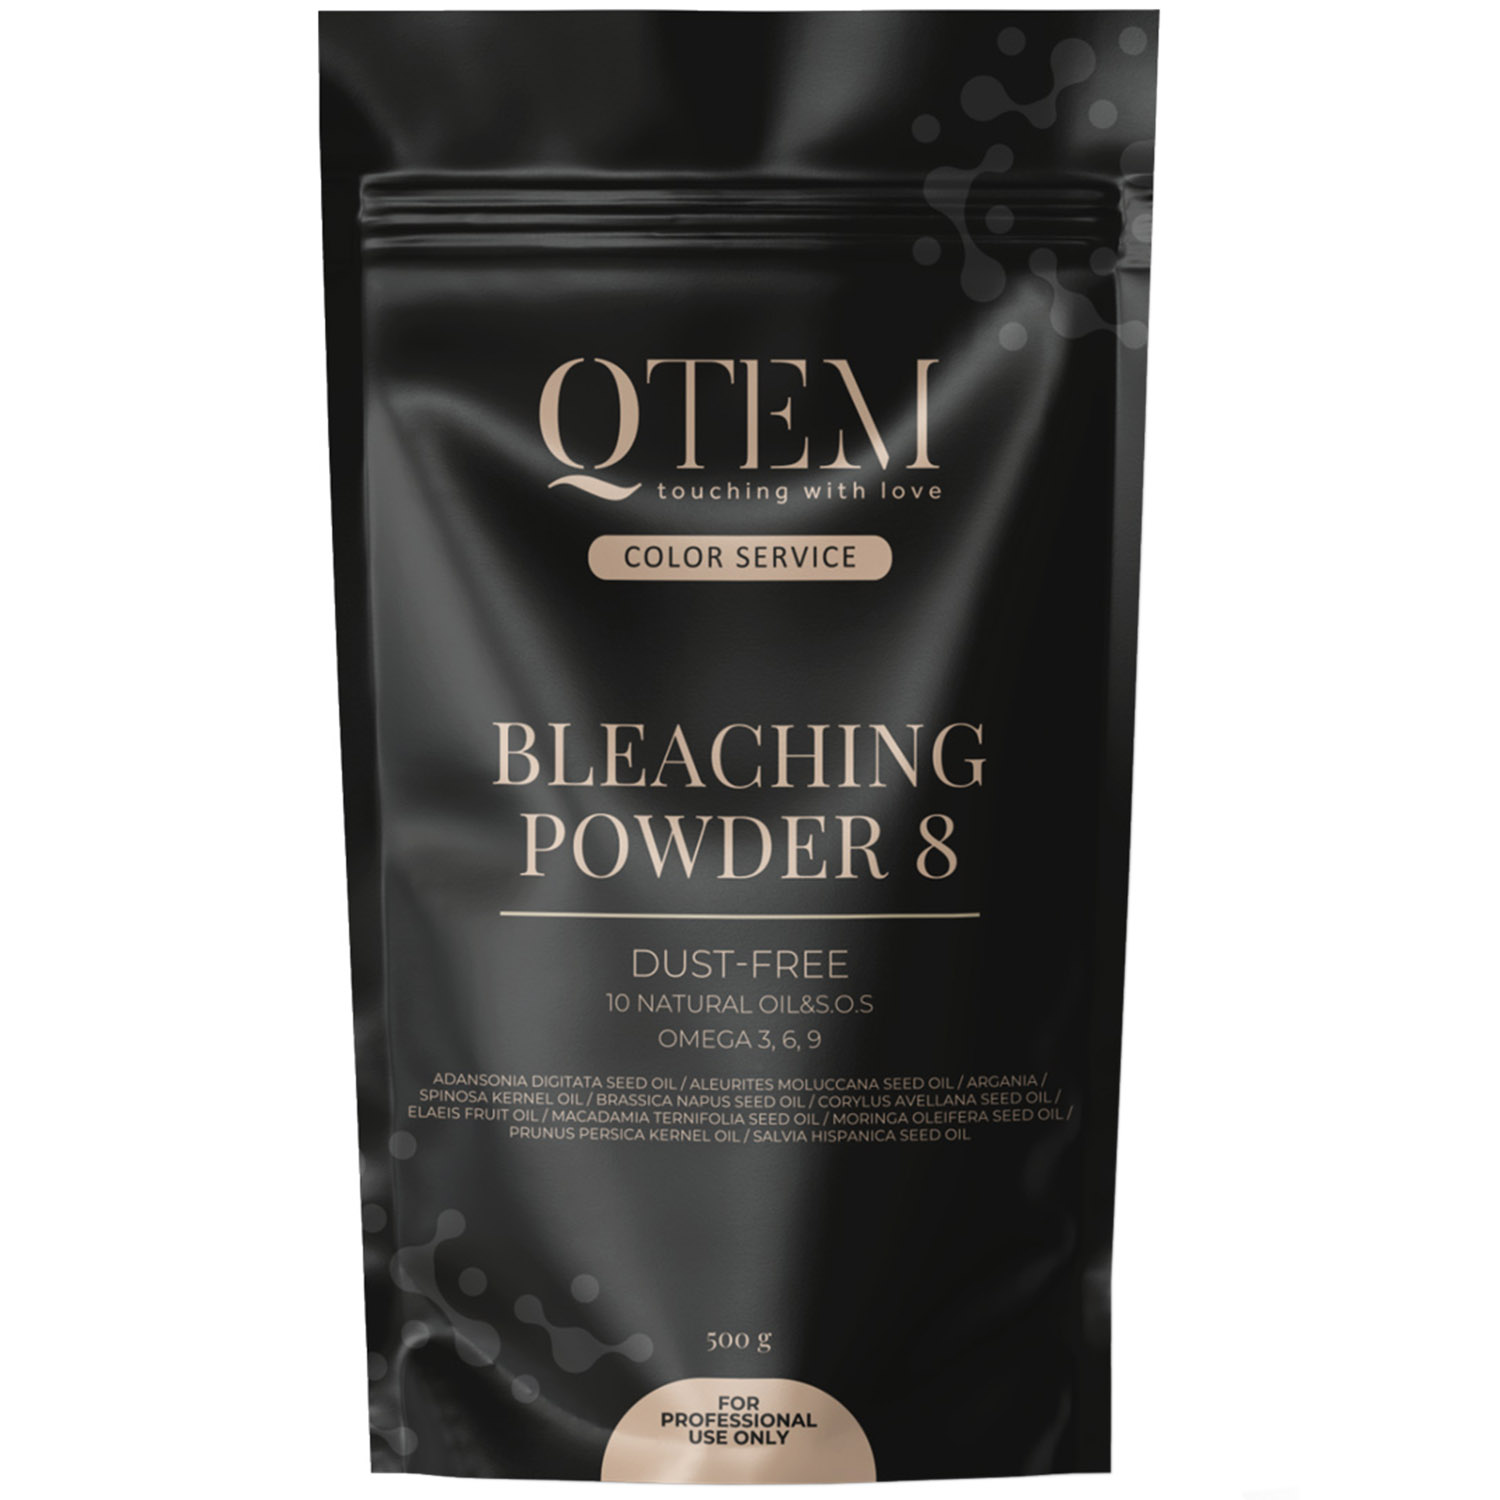 Qtem Обесцвечивающий порошок Bleaching Powder 8, 500 г (Qtem, Color Service)